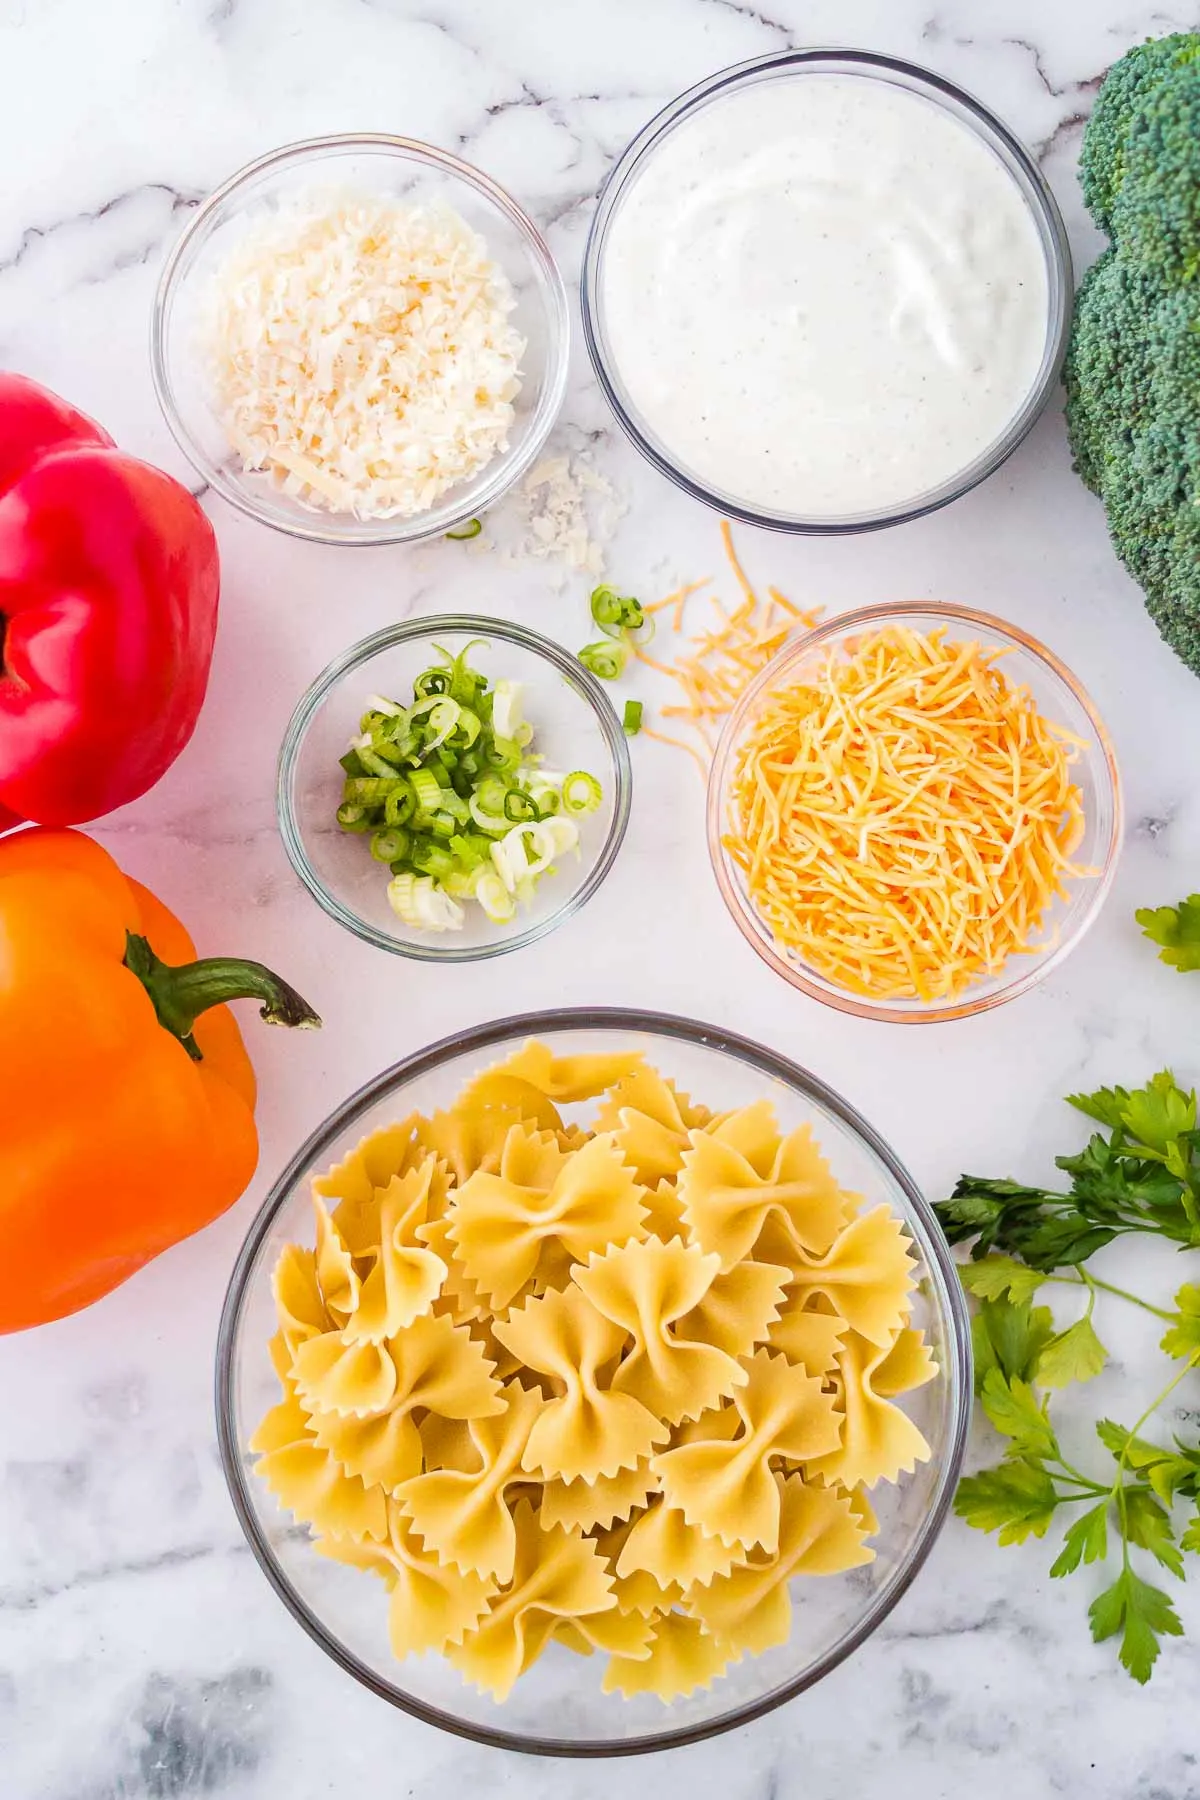 Ingredients for broccoli ranch pasta salad.